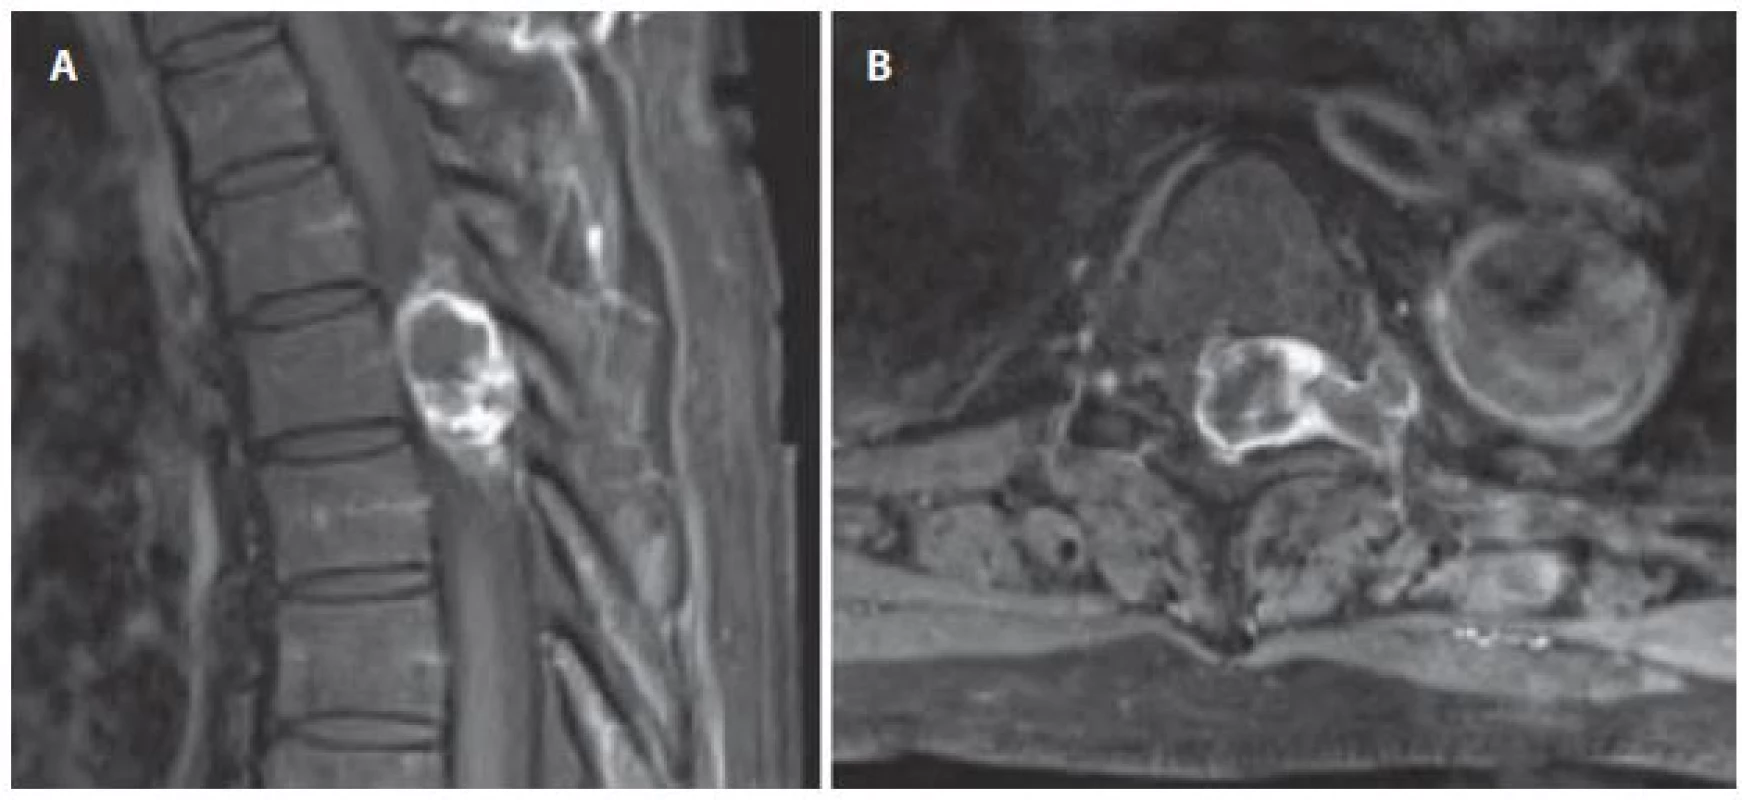 Sutkovitý neurinom v Th5–Th6 vlevo, intraspinální porce je extradurálně.
Obr. 8a) MR v sagitální rovině.
Obr. 8b) MR v axiální rovině.
Fig. 8. Dumbbell-shaped left sided neurinoma at level Th5–Th6, intraspinal part is extraduraly.
Fig. 8a) Sagittal view MRI.
Fig. 8b) Axial view MRI.